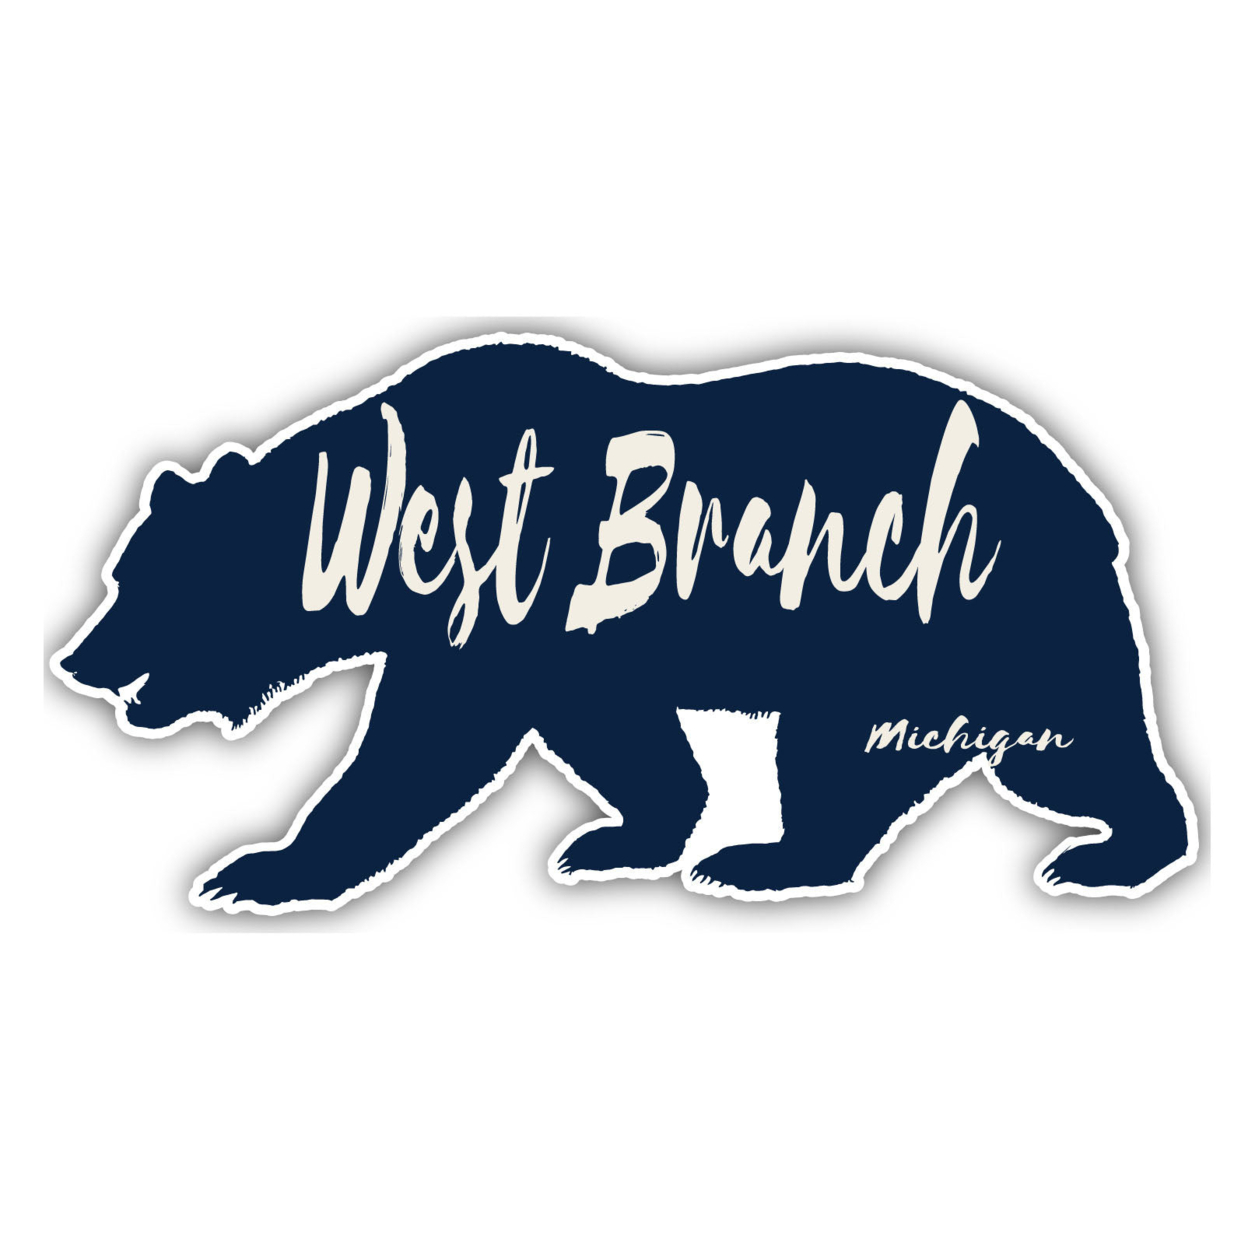 West Branch Michigan Souvenir Decorative Stickers (Choose Theme And Size) - Single Unit, 4-Inch, Bear